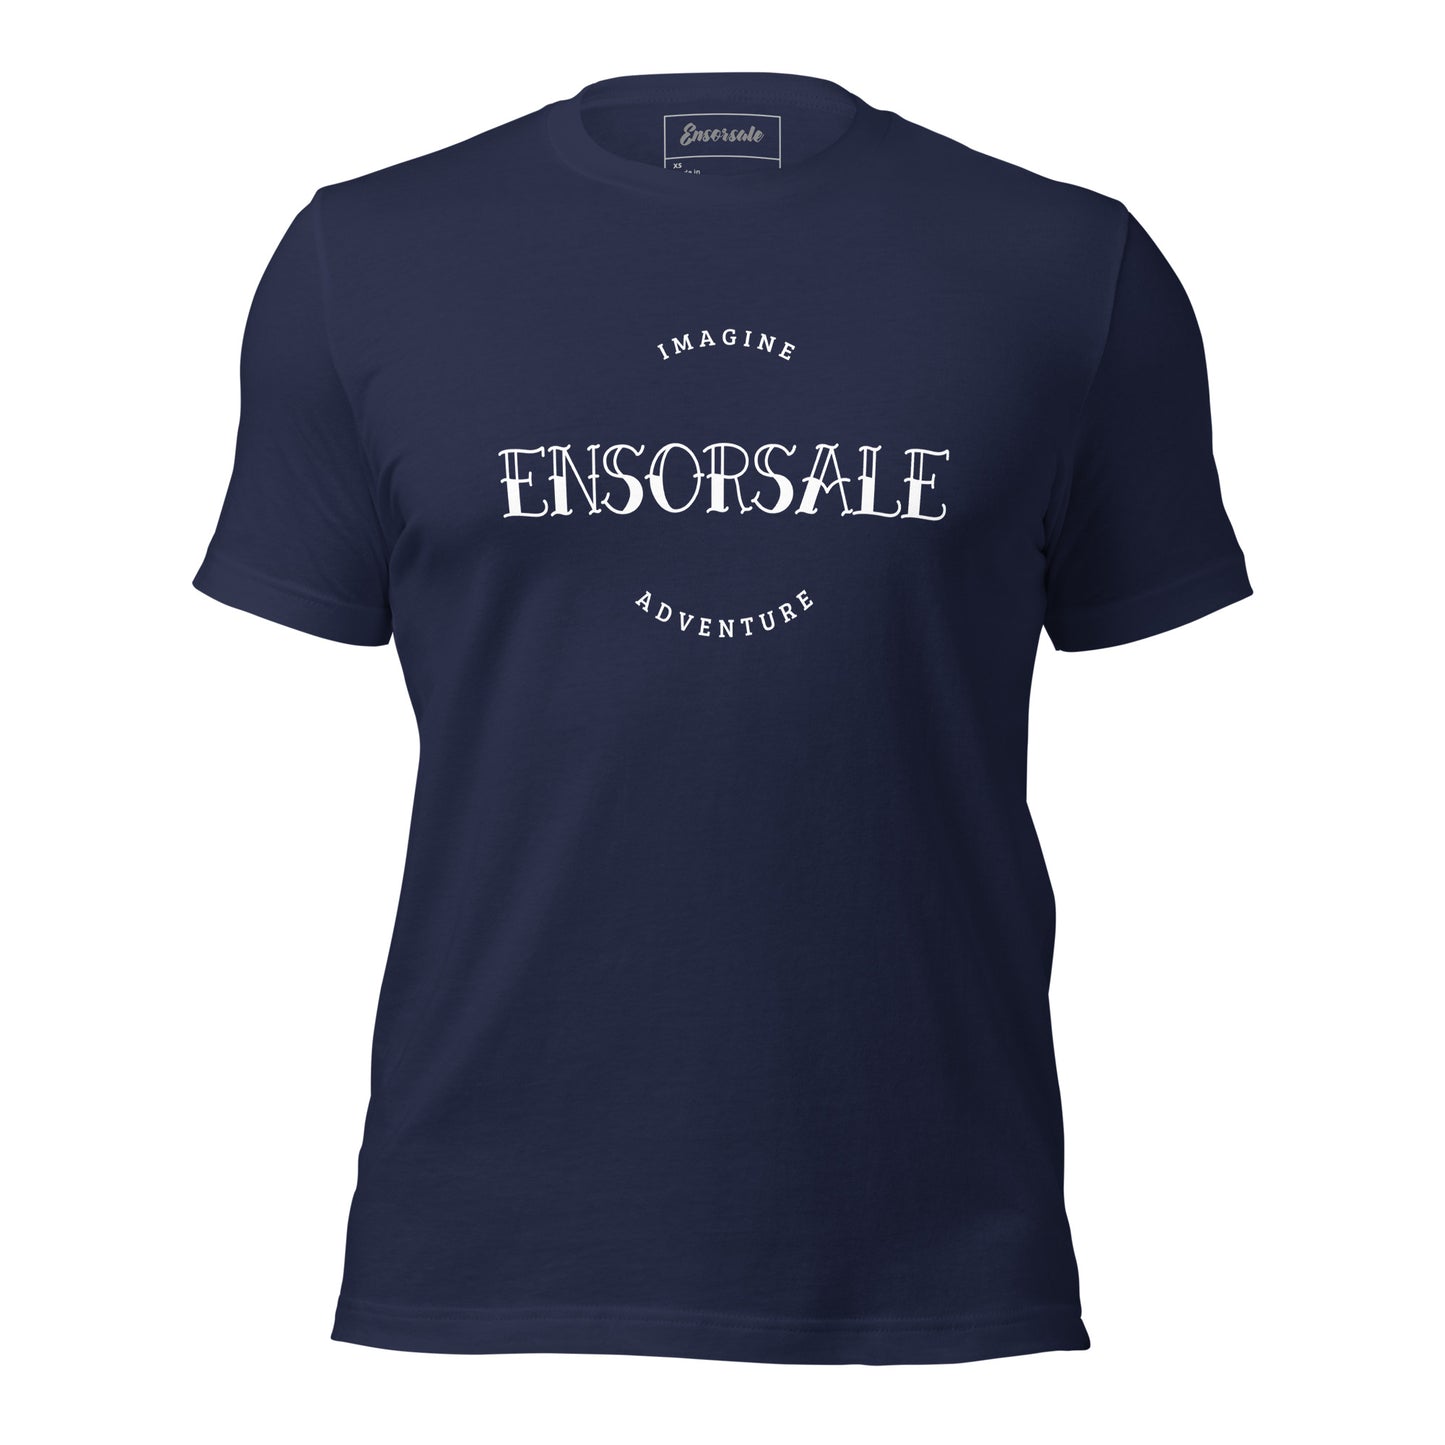 Ensorsale Imagine Adventure Tshirt